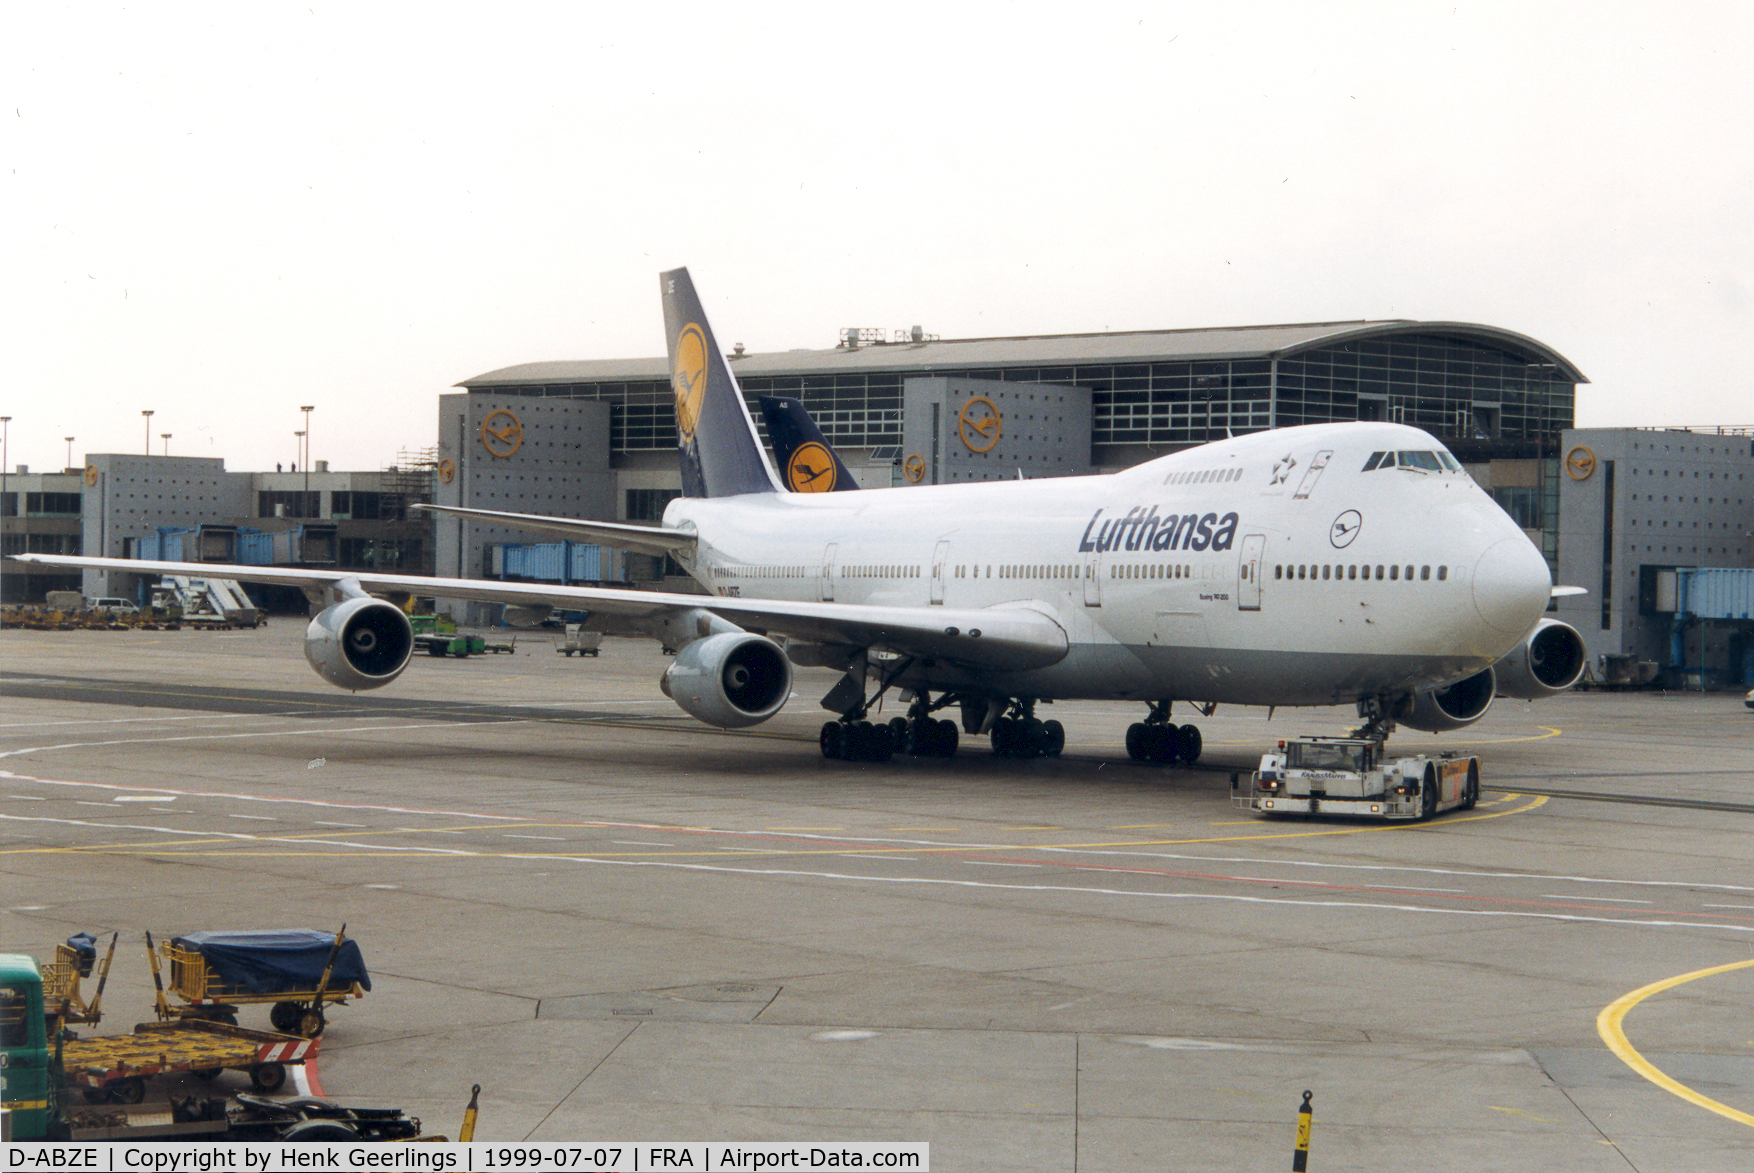 D-ABZE, 1986 Boeing 747-230BM C/N 23509, Lufthansa